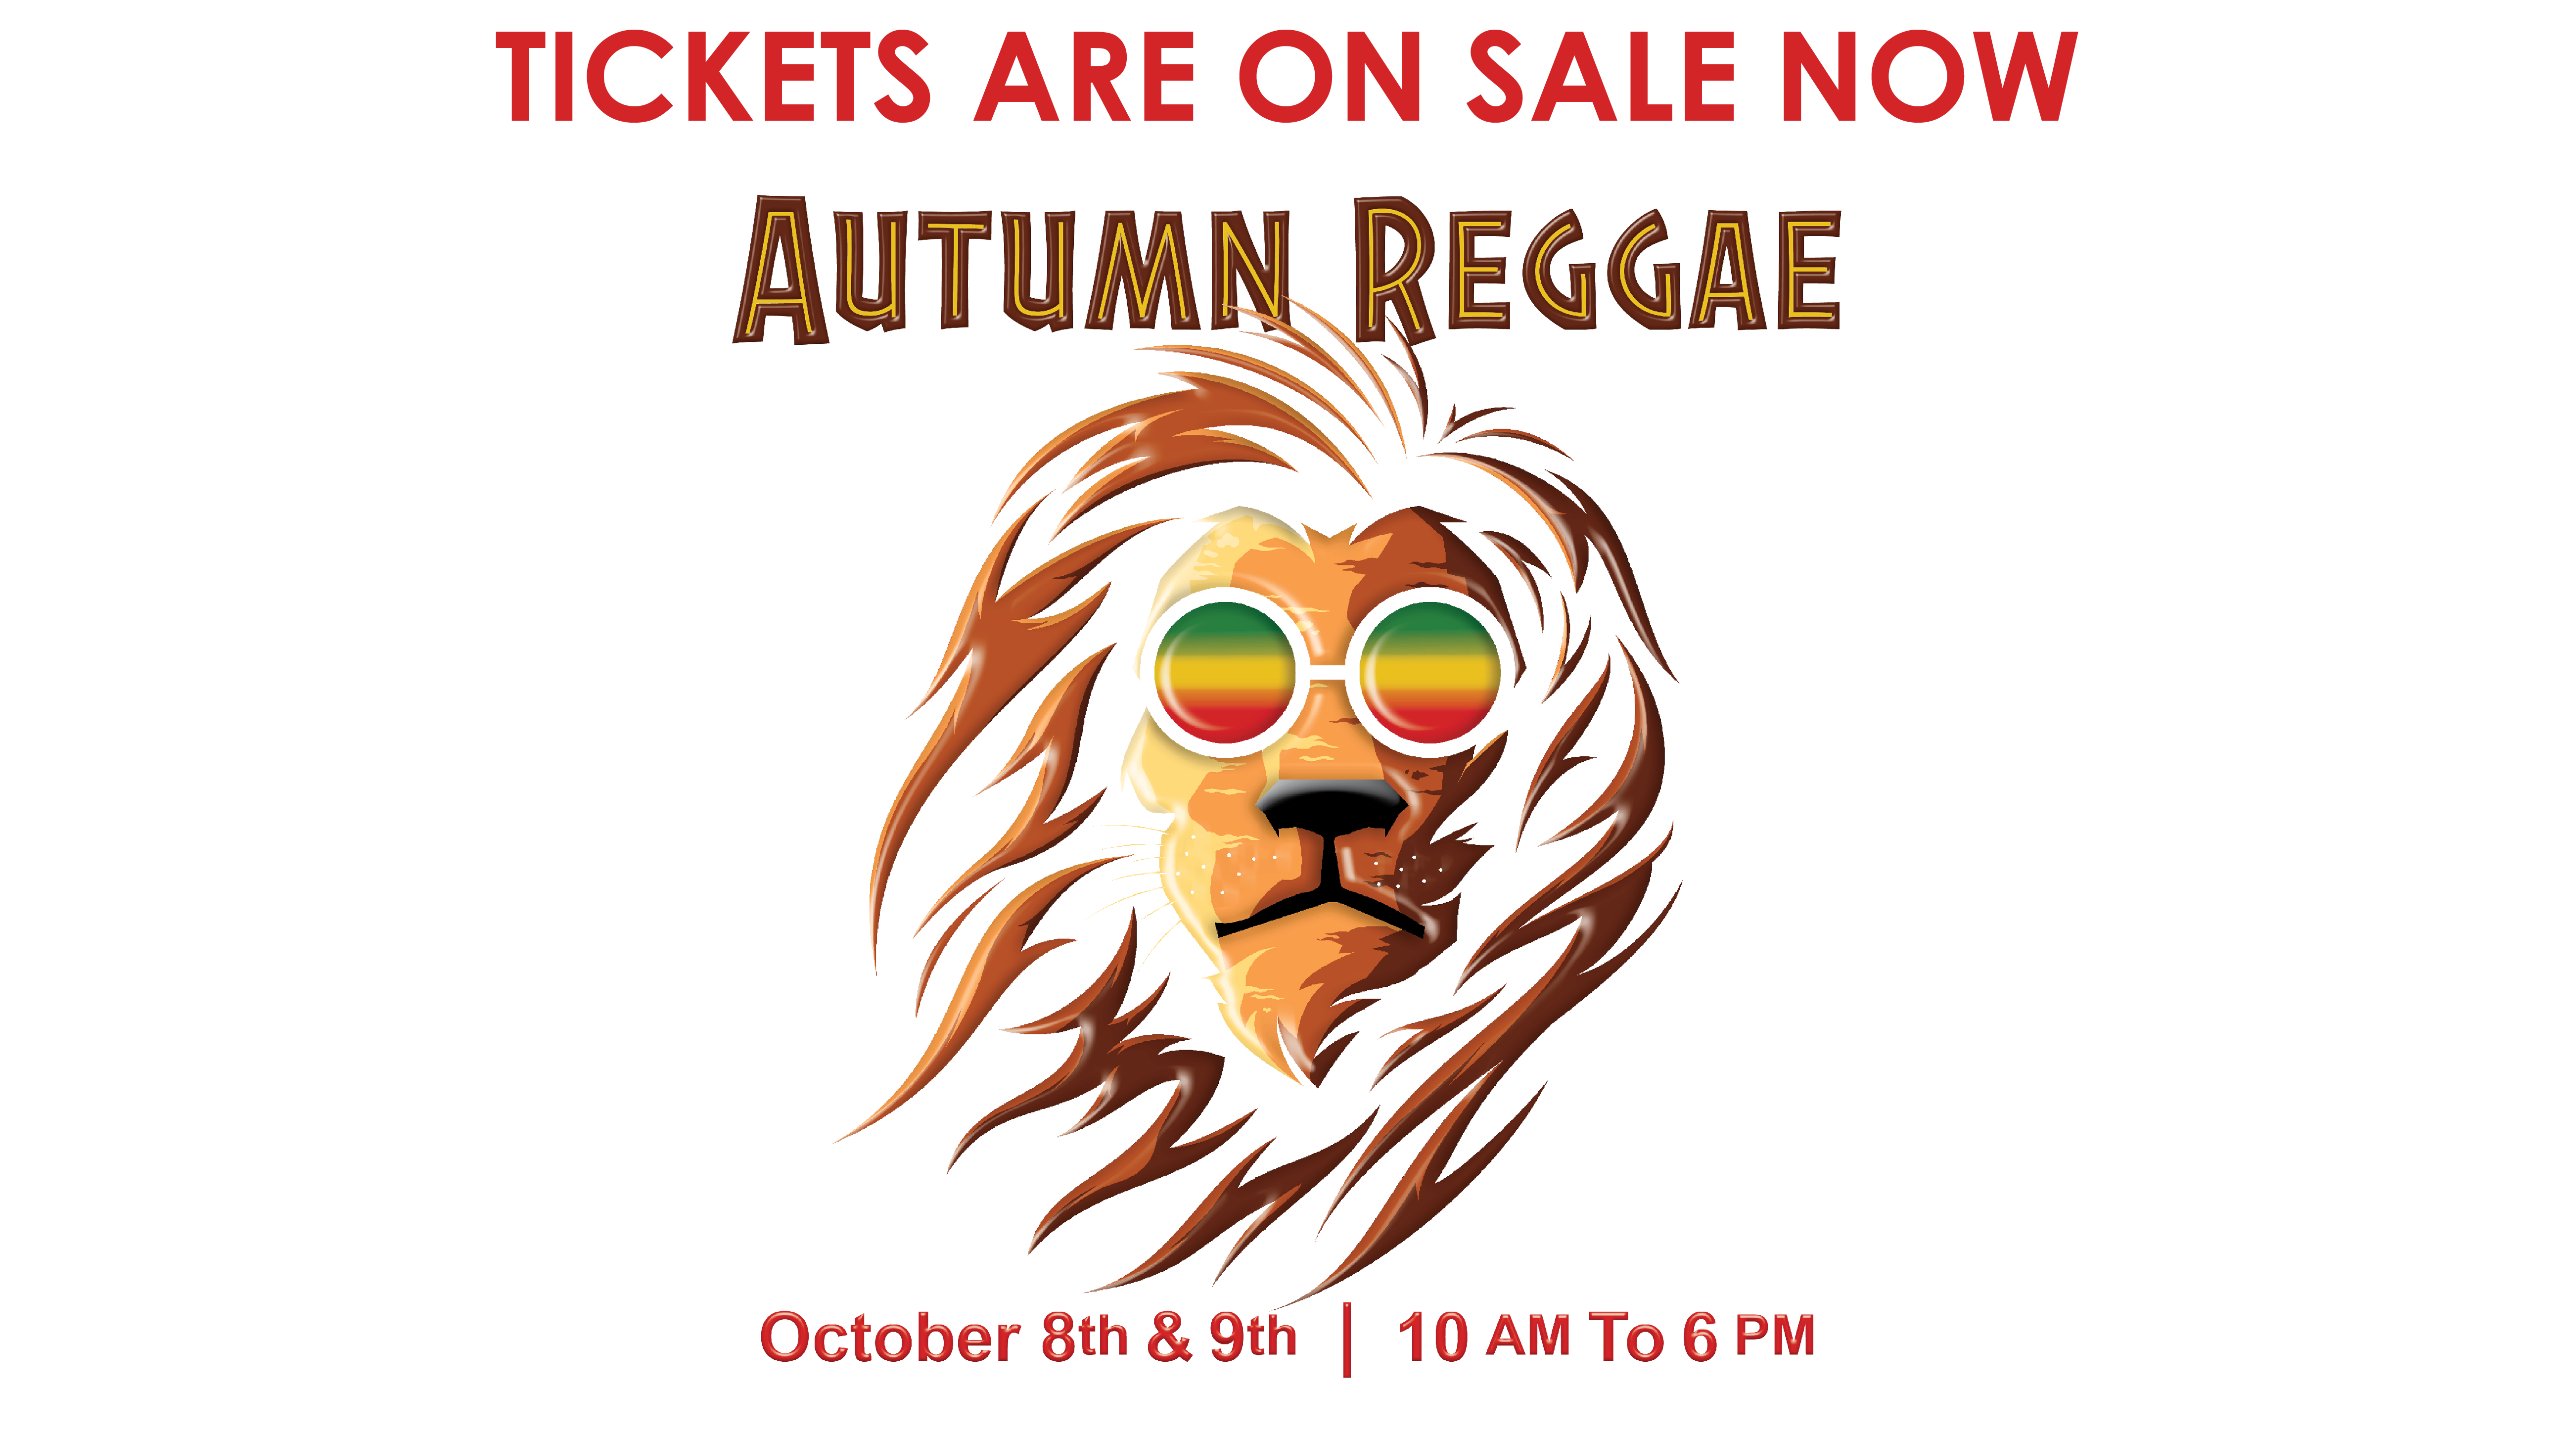 Autumn Reggae Tickets on sale now